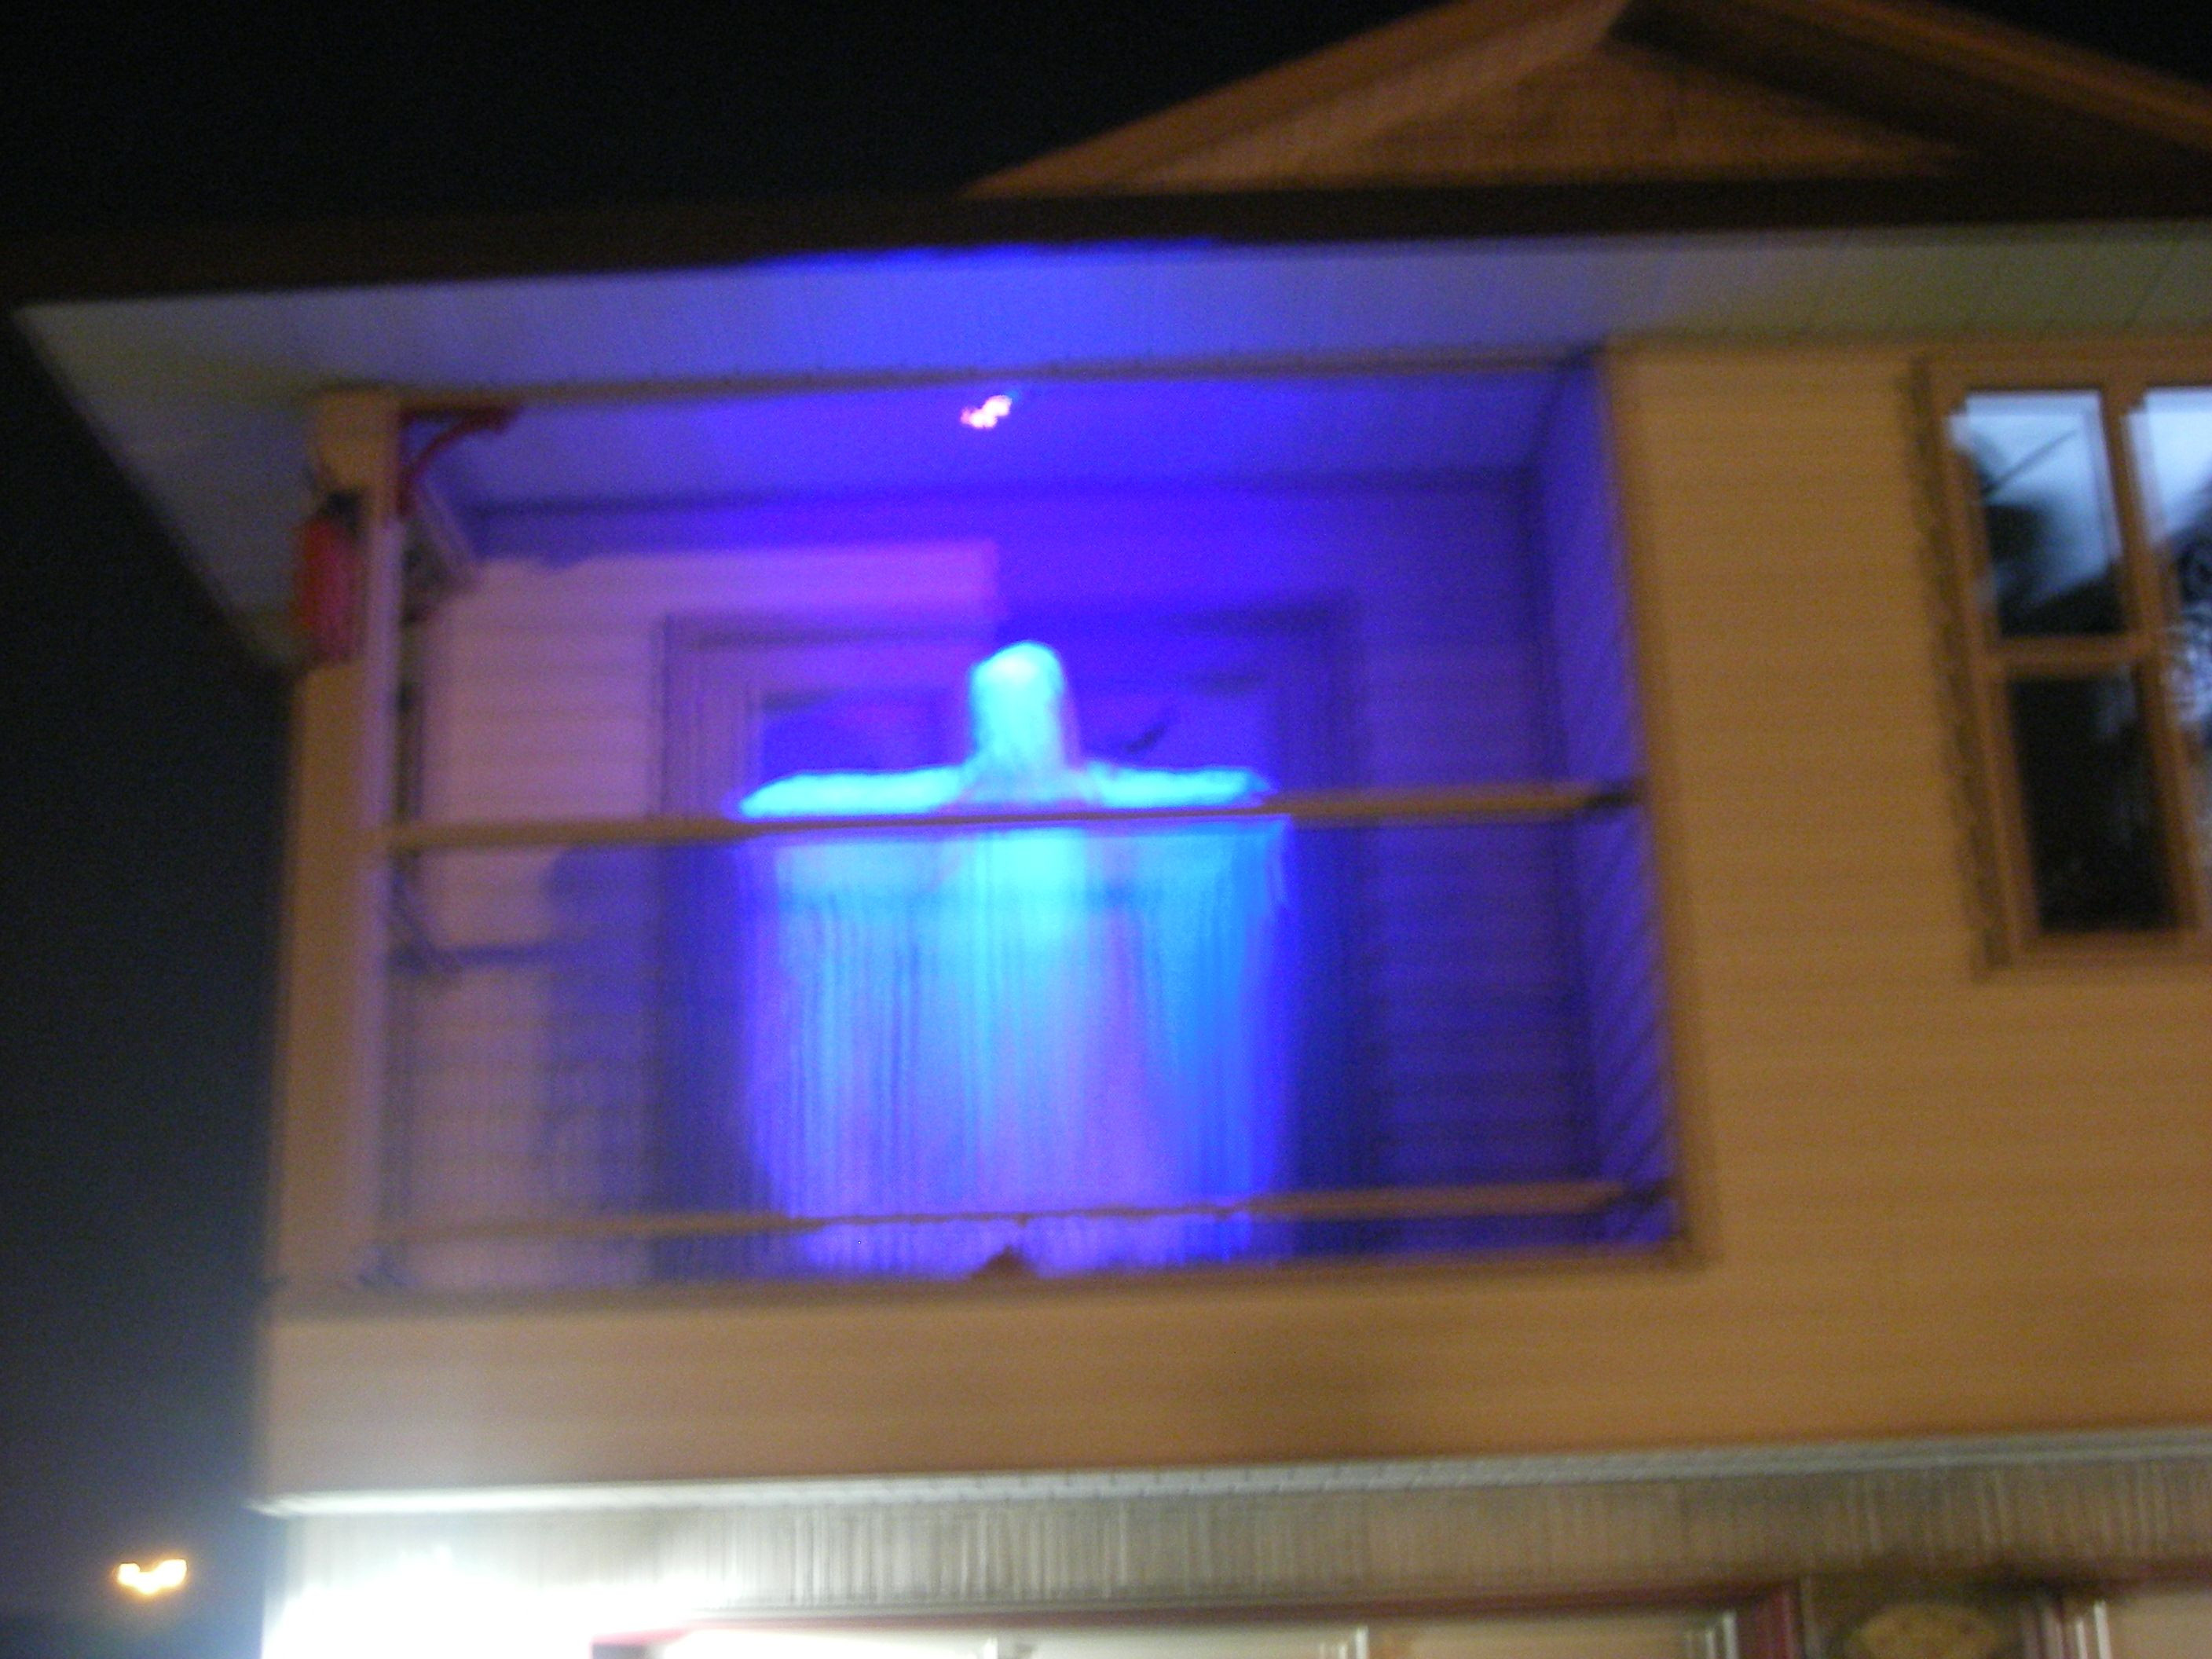 Apartment Balcony Halloween Decorations
 Ghost on the balcony